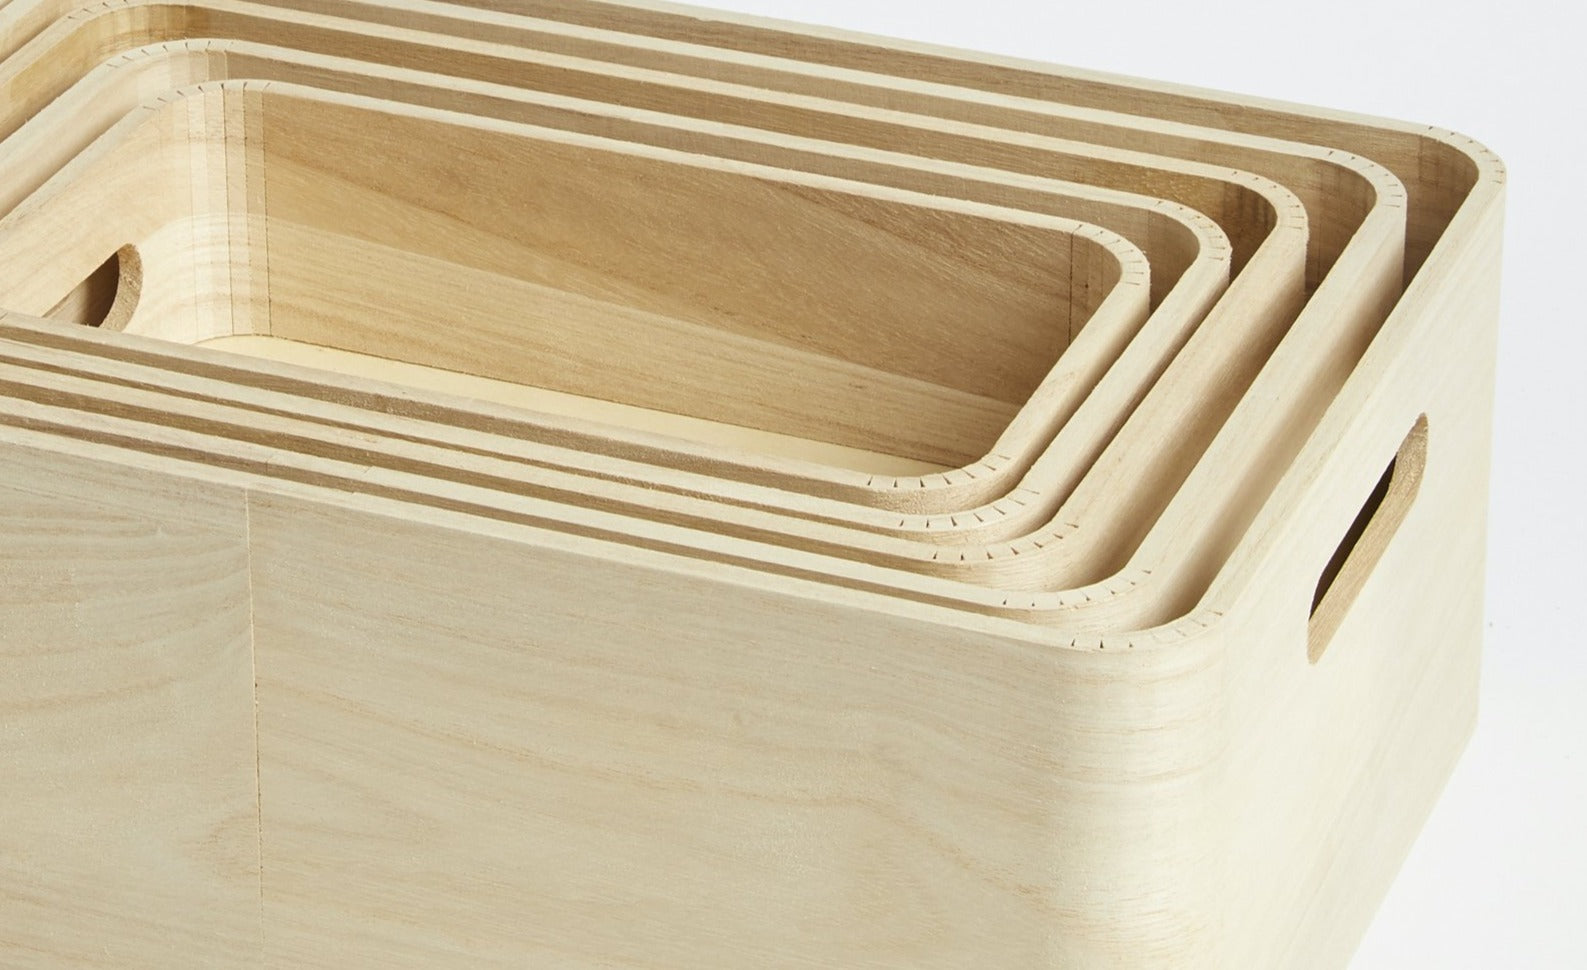 Set of 5 Wooden Storage Boxes | Shop at KonMari by Marie Kondo